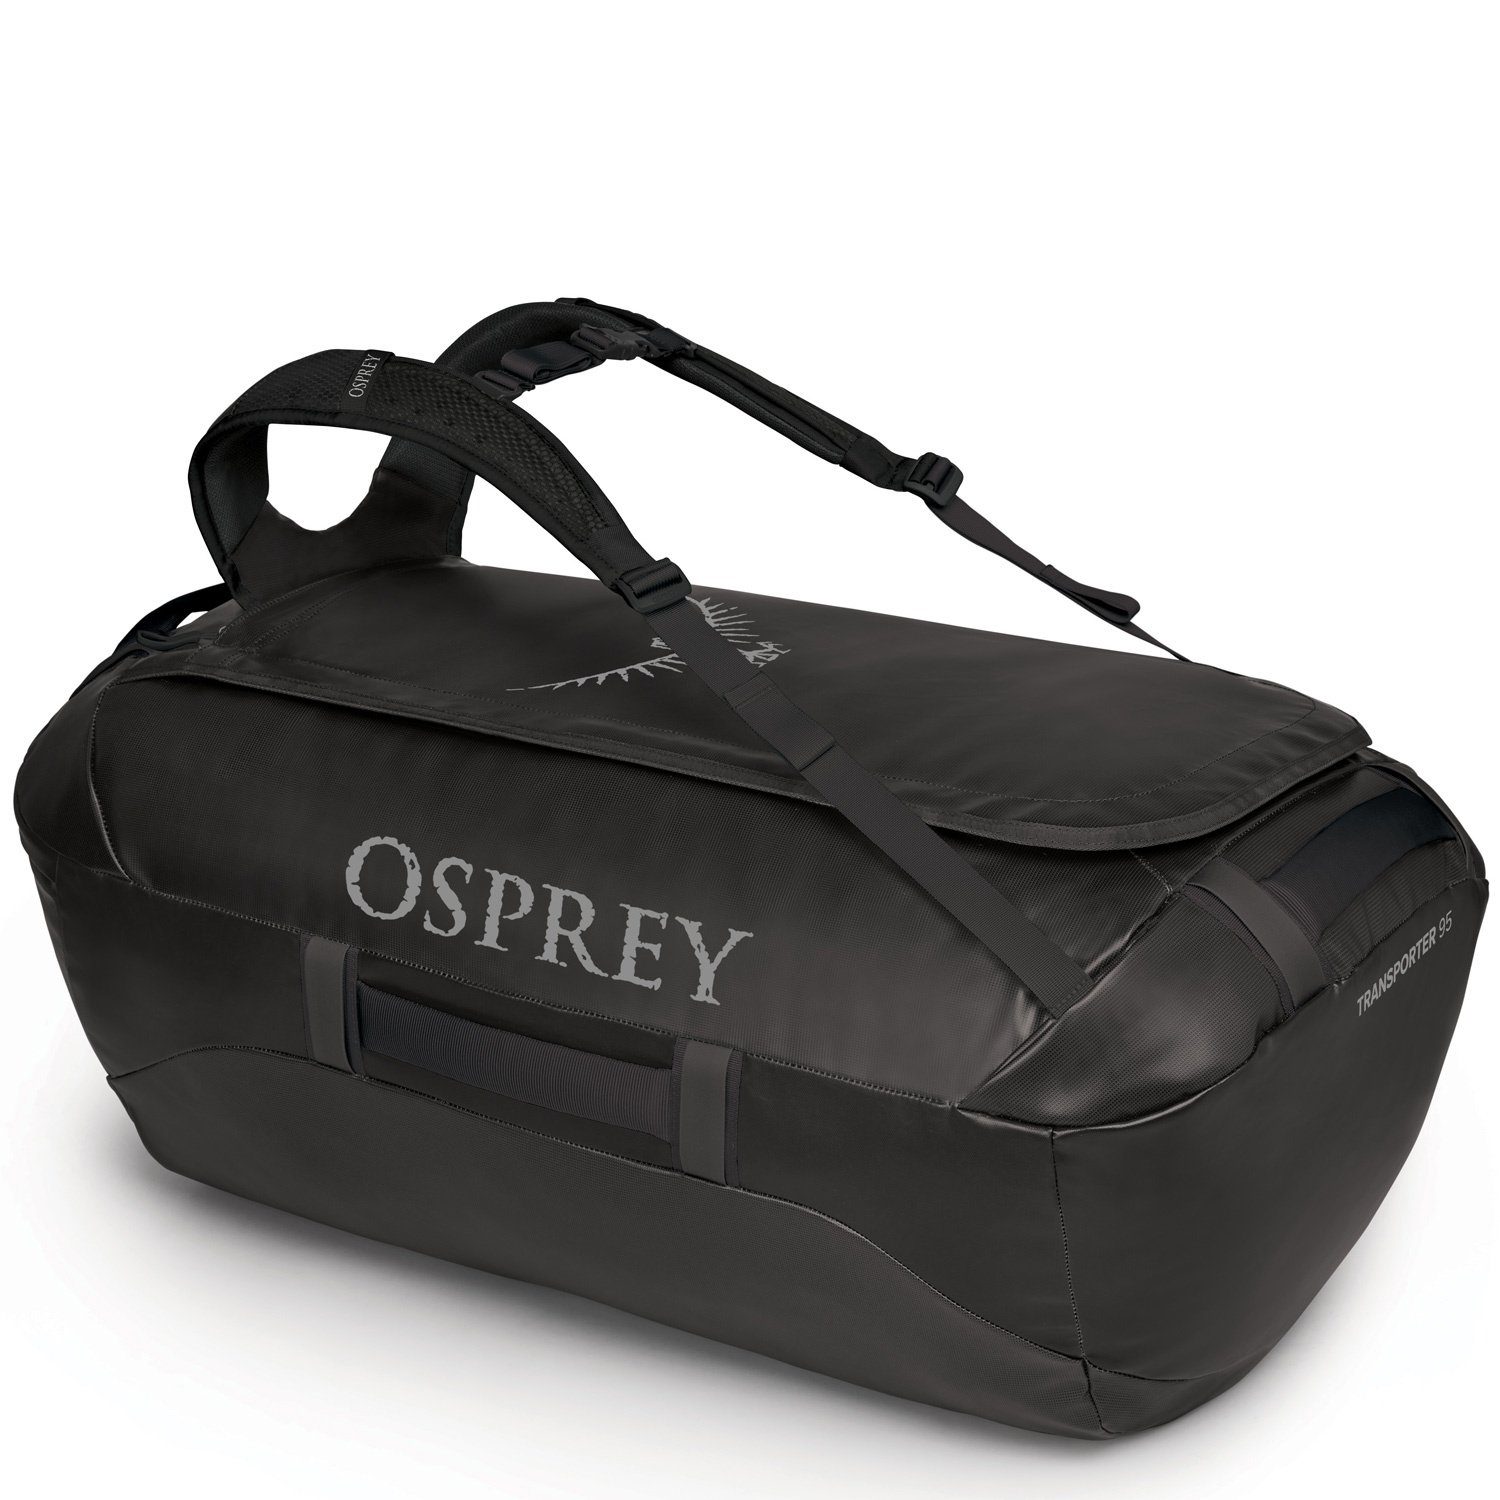 Osprey Rucksack OSPREY Reisetasche/Rucksack 95 (Stück, Transporter Stück) Black